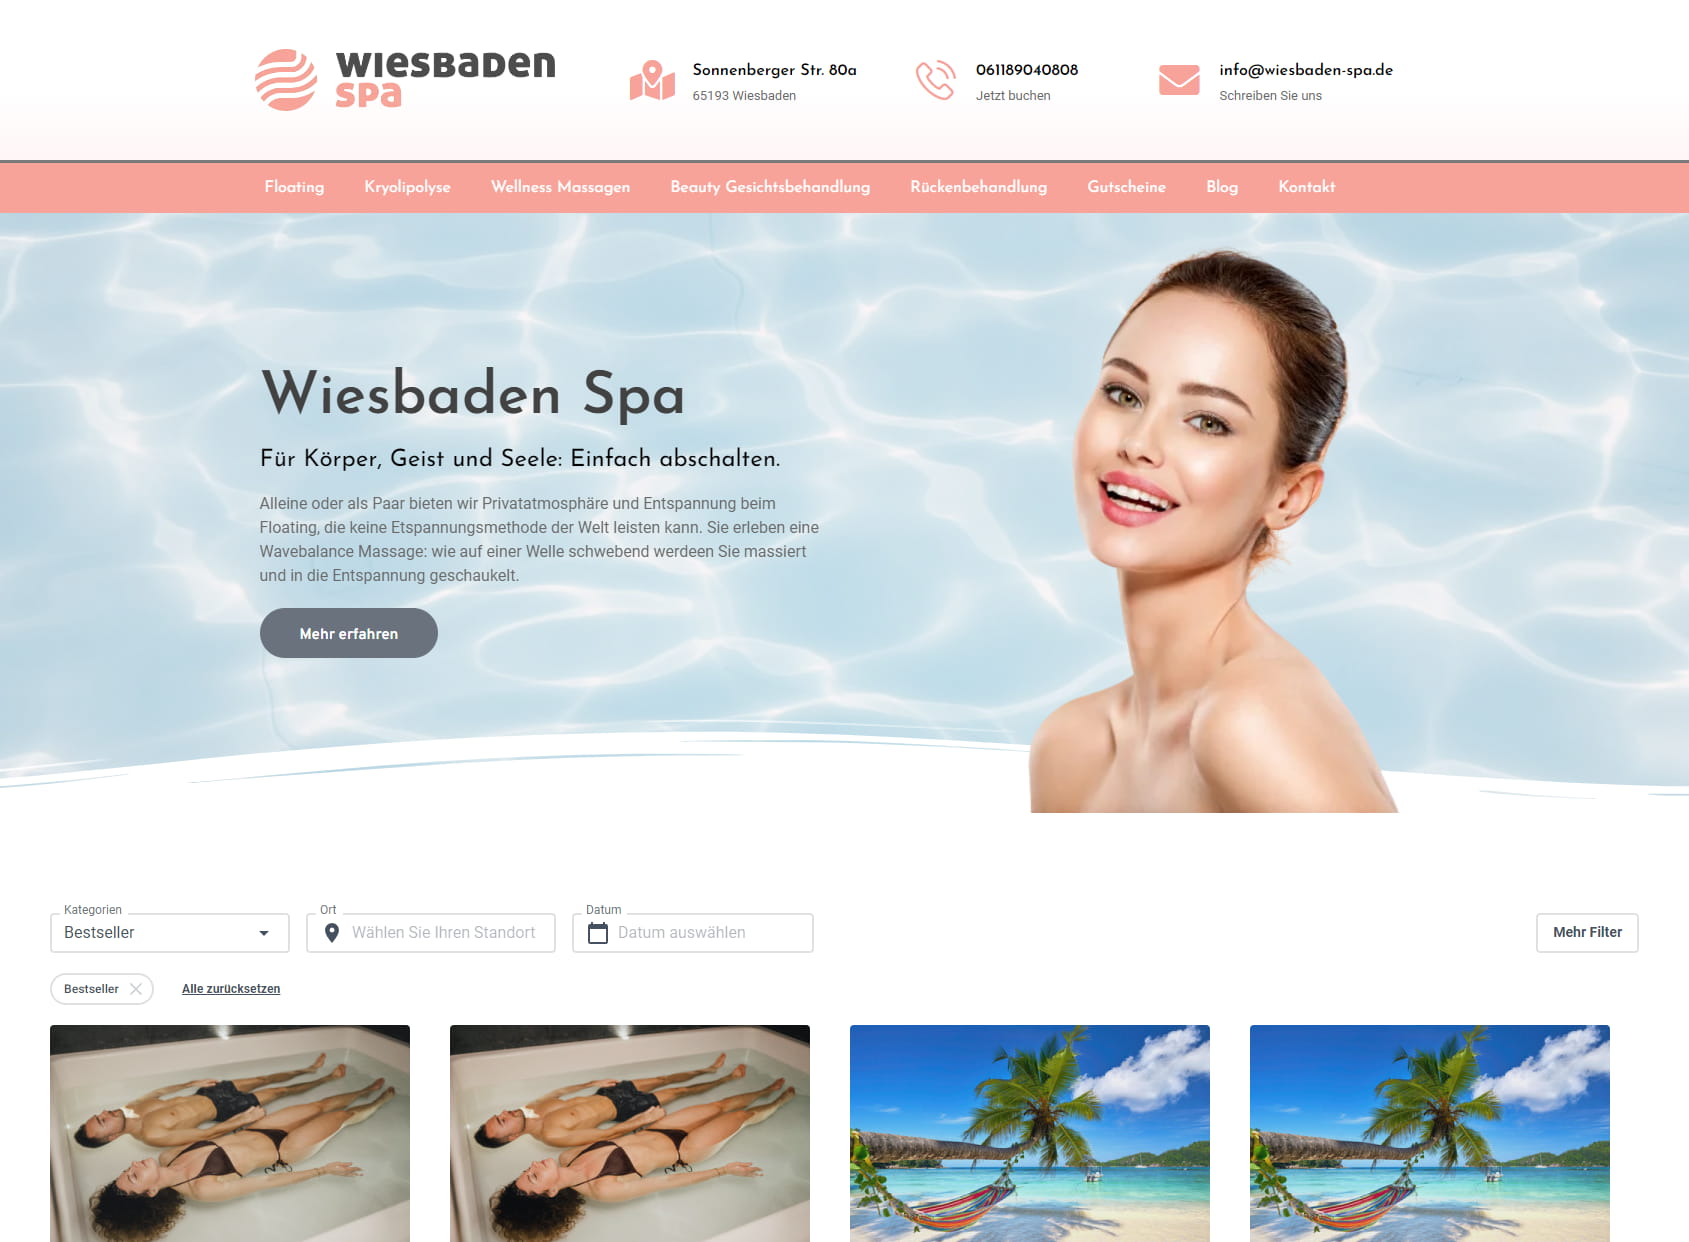 Wiesbaden SPA - Massage & Floating - Kryolipolyse